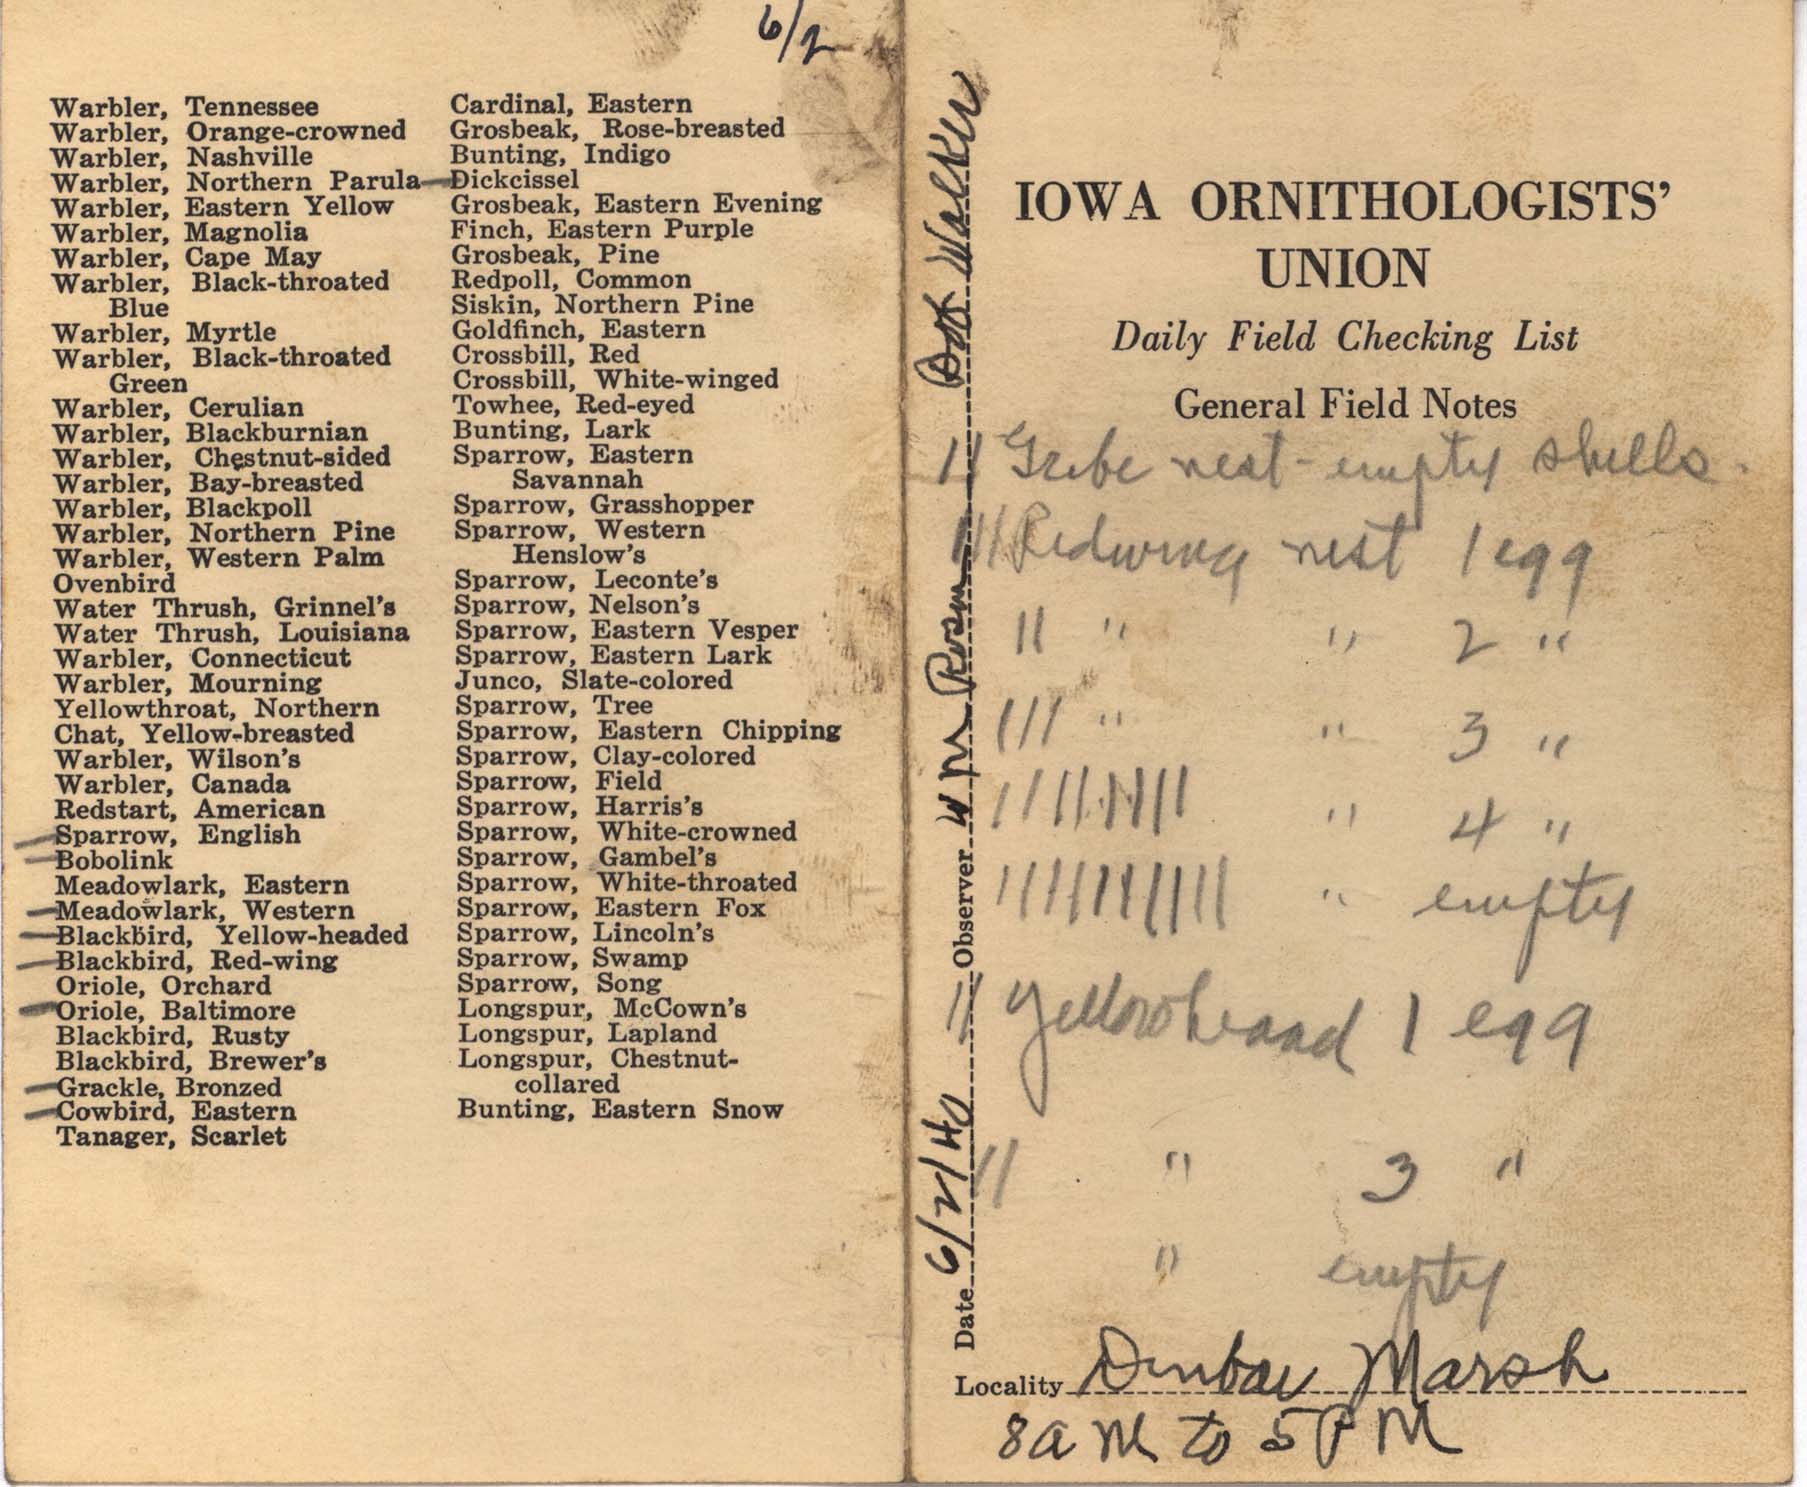 Daily field checking list by Walter Rosene, June 2, 1940